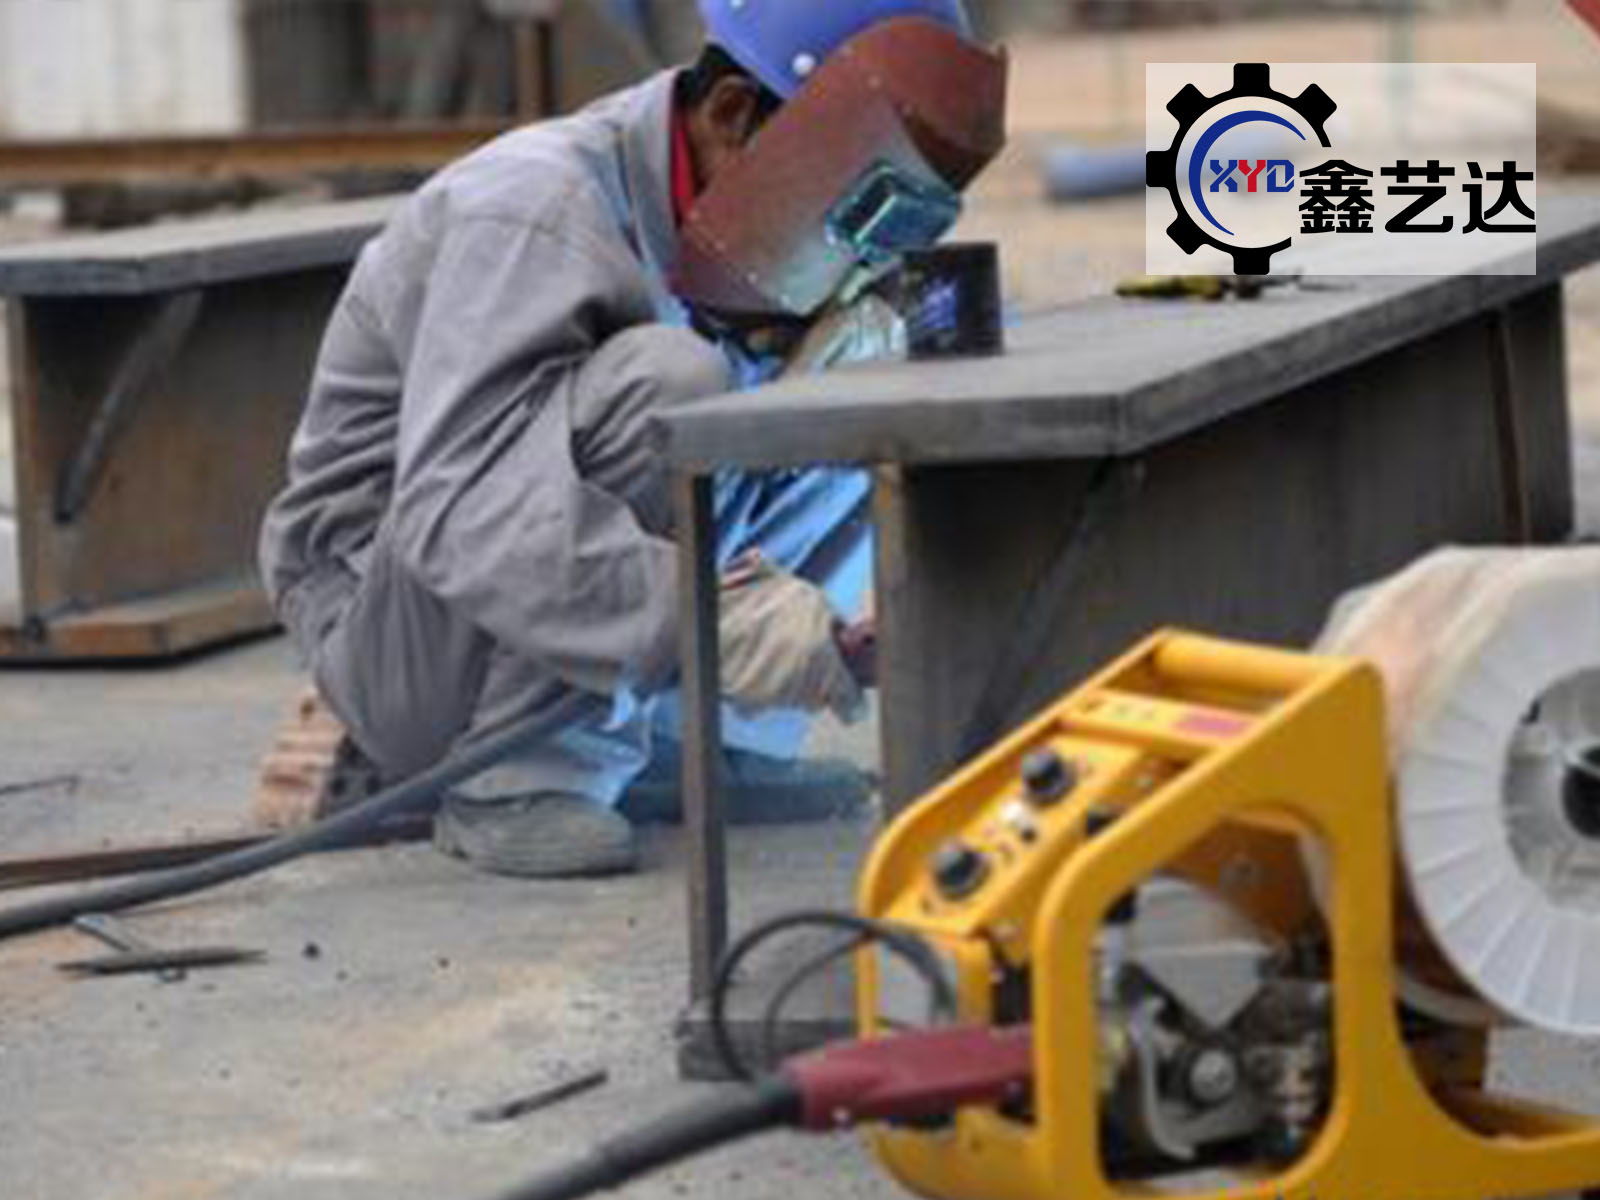 Gas shielded welder safety technical operation procedures